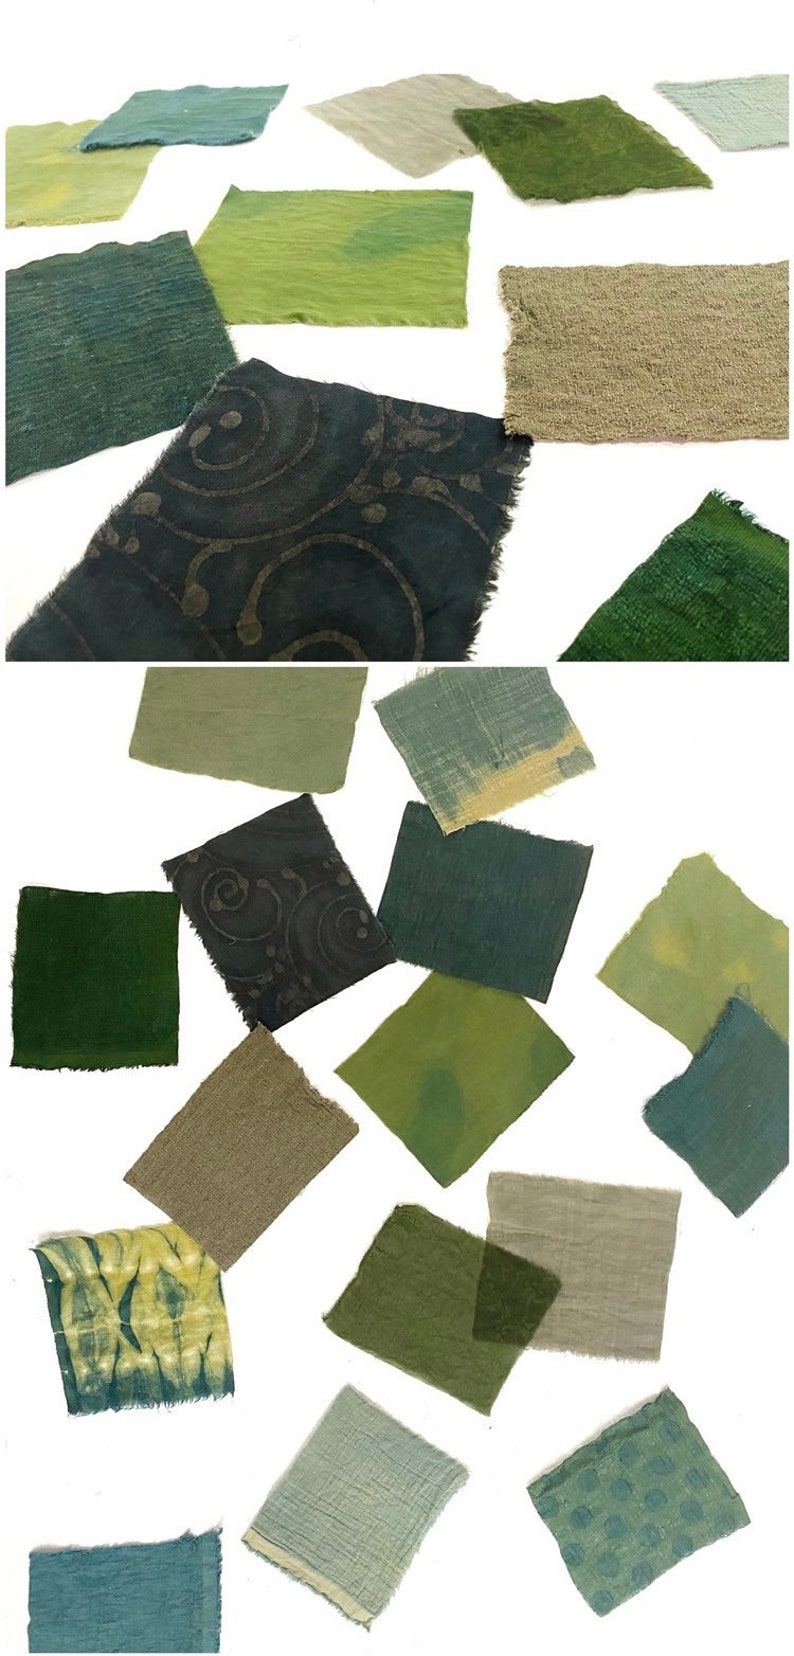 Japanese Scraps Remnants Patches Package Organic Plant Dye Green Set of 11-18 Cotton Linen Fabric Scraps DIY Zero Waste image 8